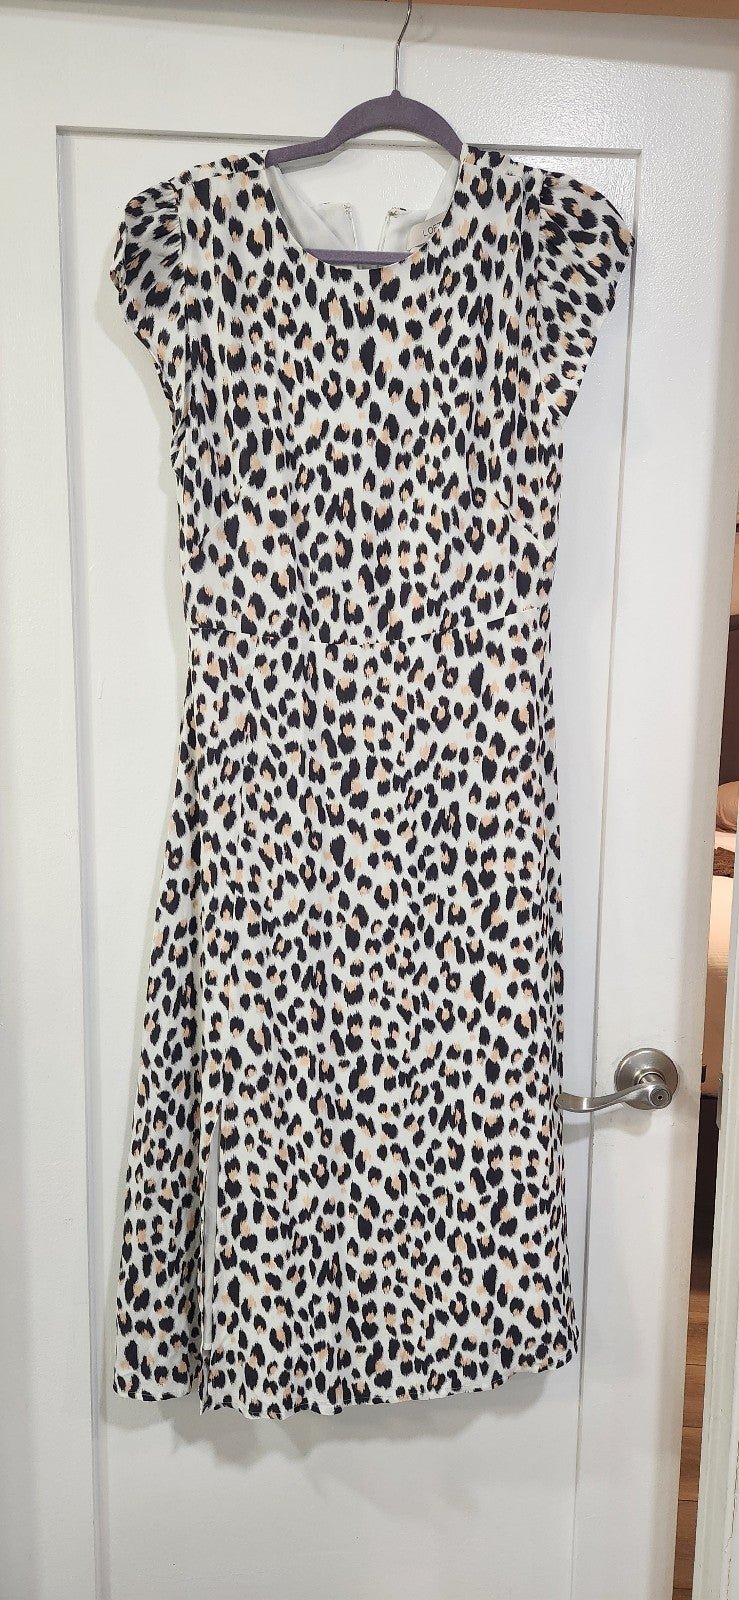 the Lowest price Loft Leopard Dress size 8 KAgtYrefz no